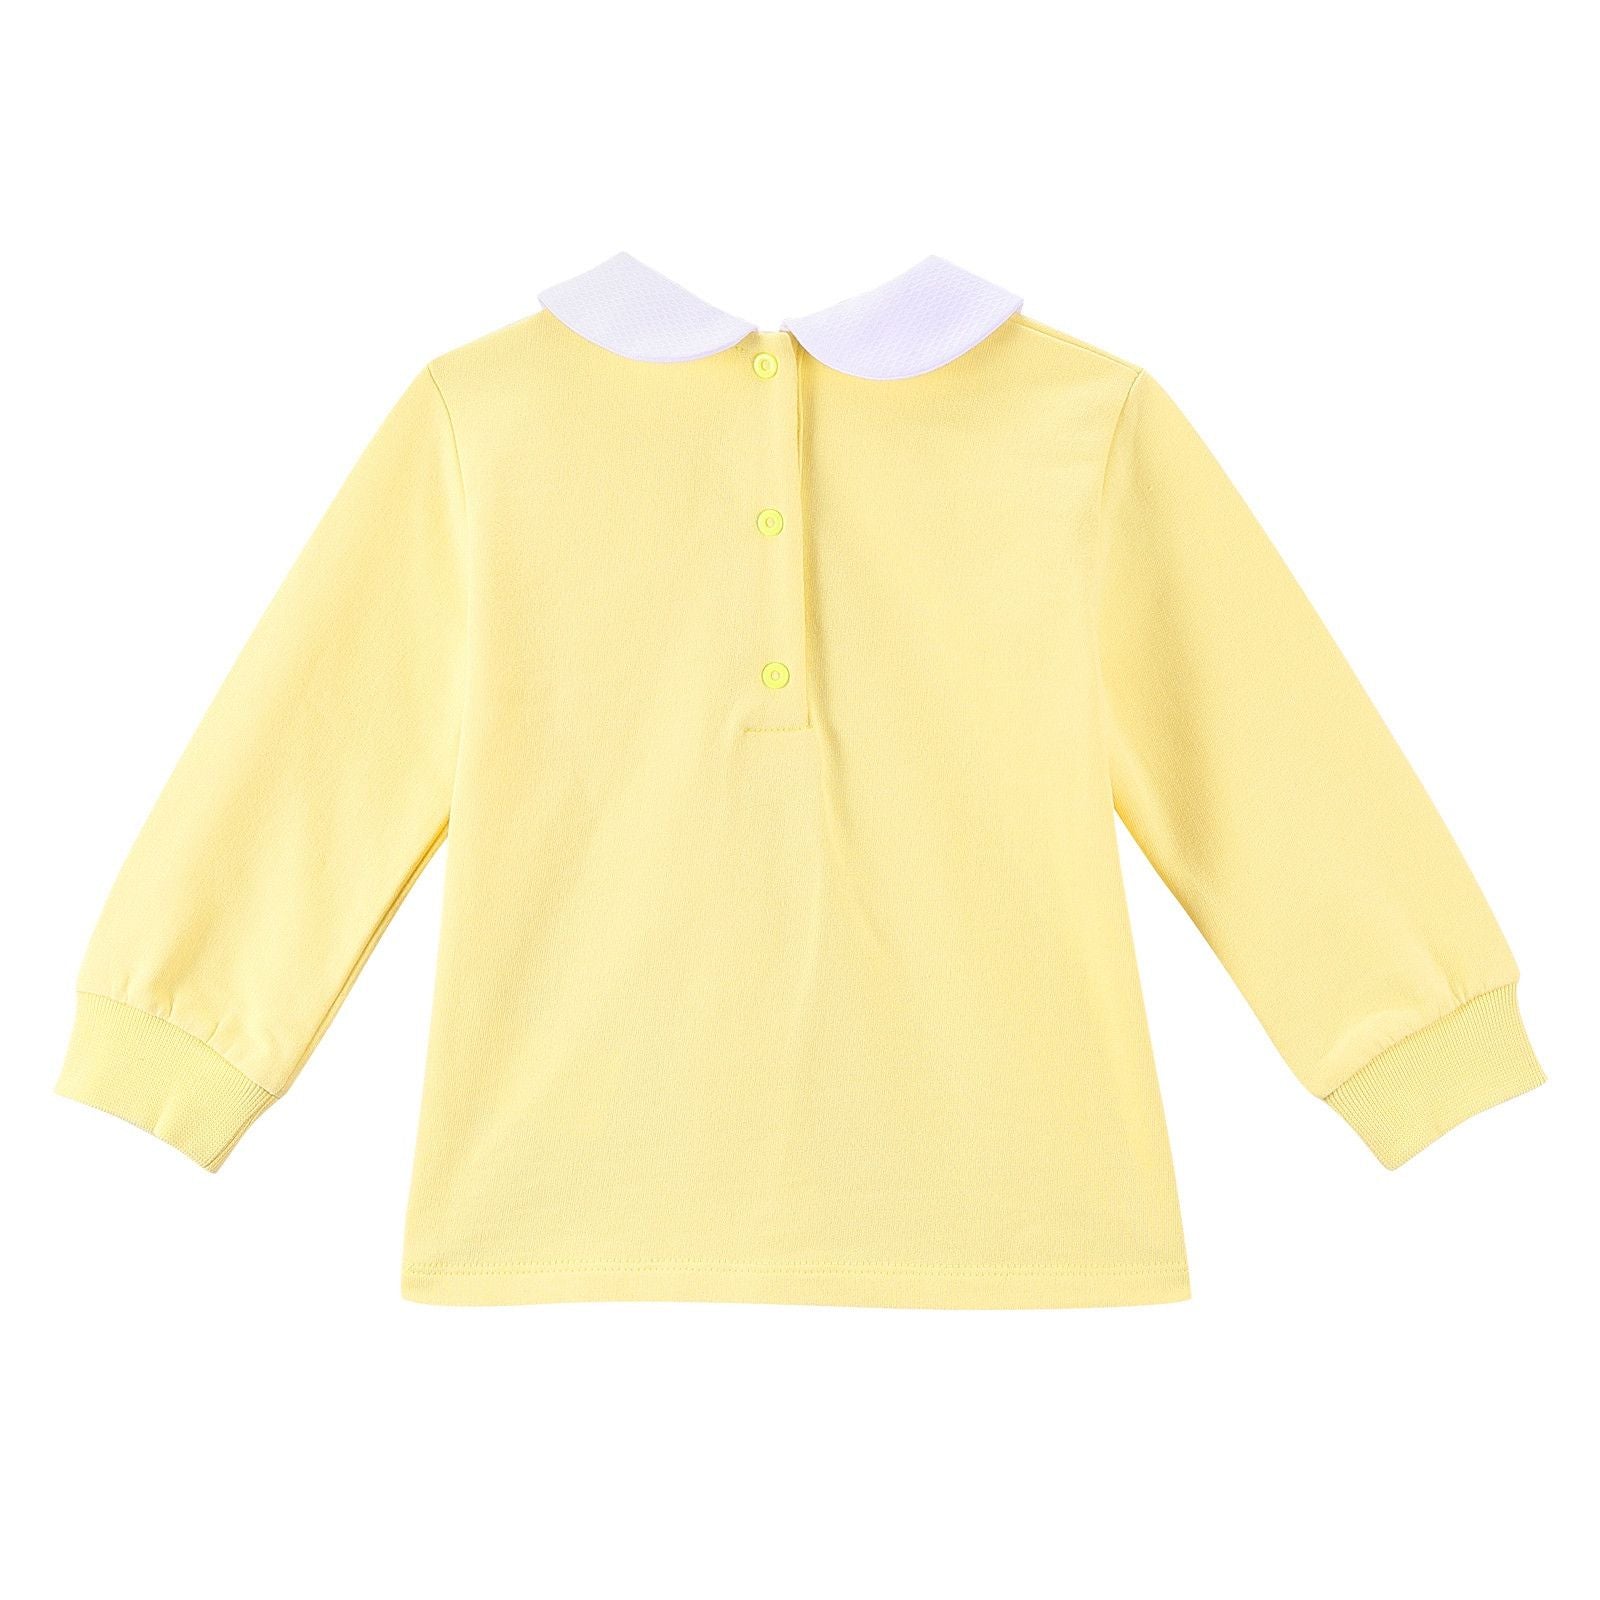 Baby Girls Light Yellow 'Monster' Printed Sweatshirt With Peter Pan Collar - CÉMAROSE | Children's Fashion Store - 2